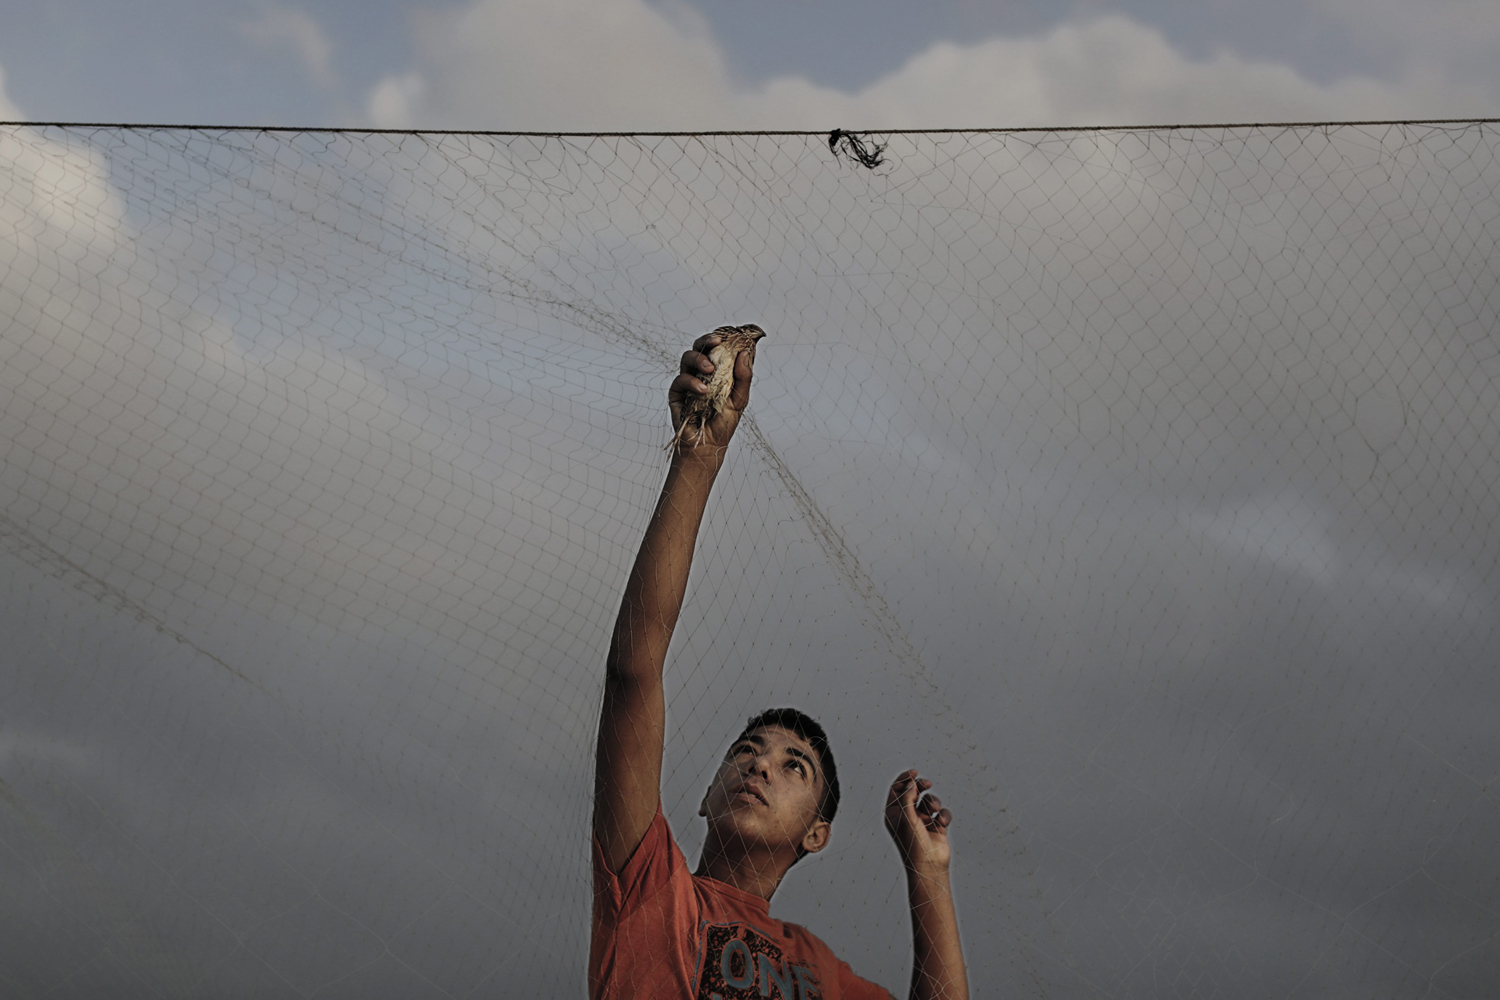 Palestinian children catch migrant quails with a net